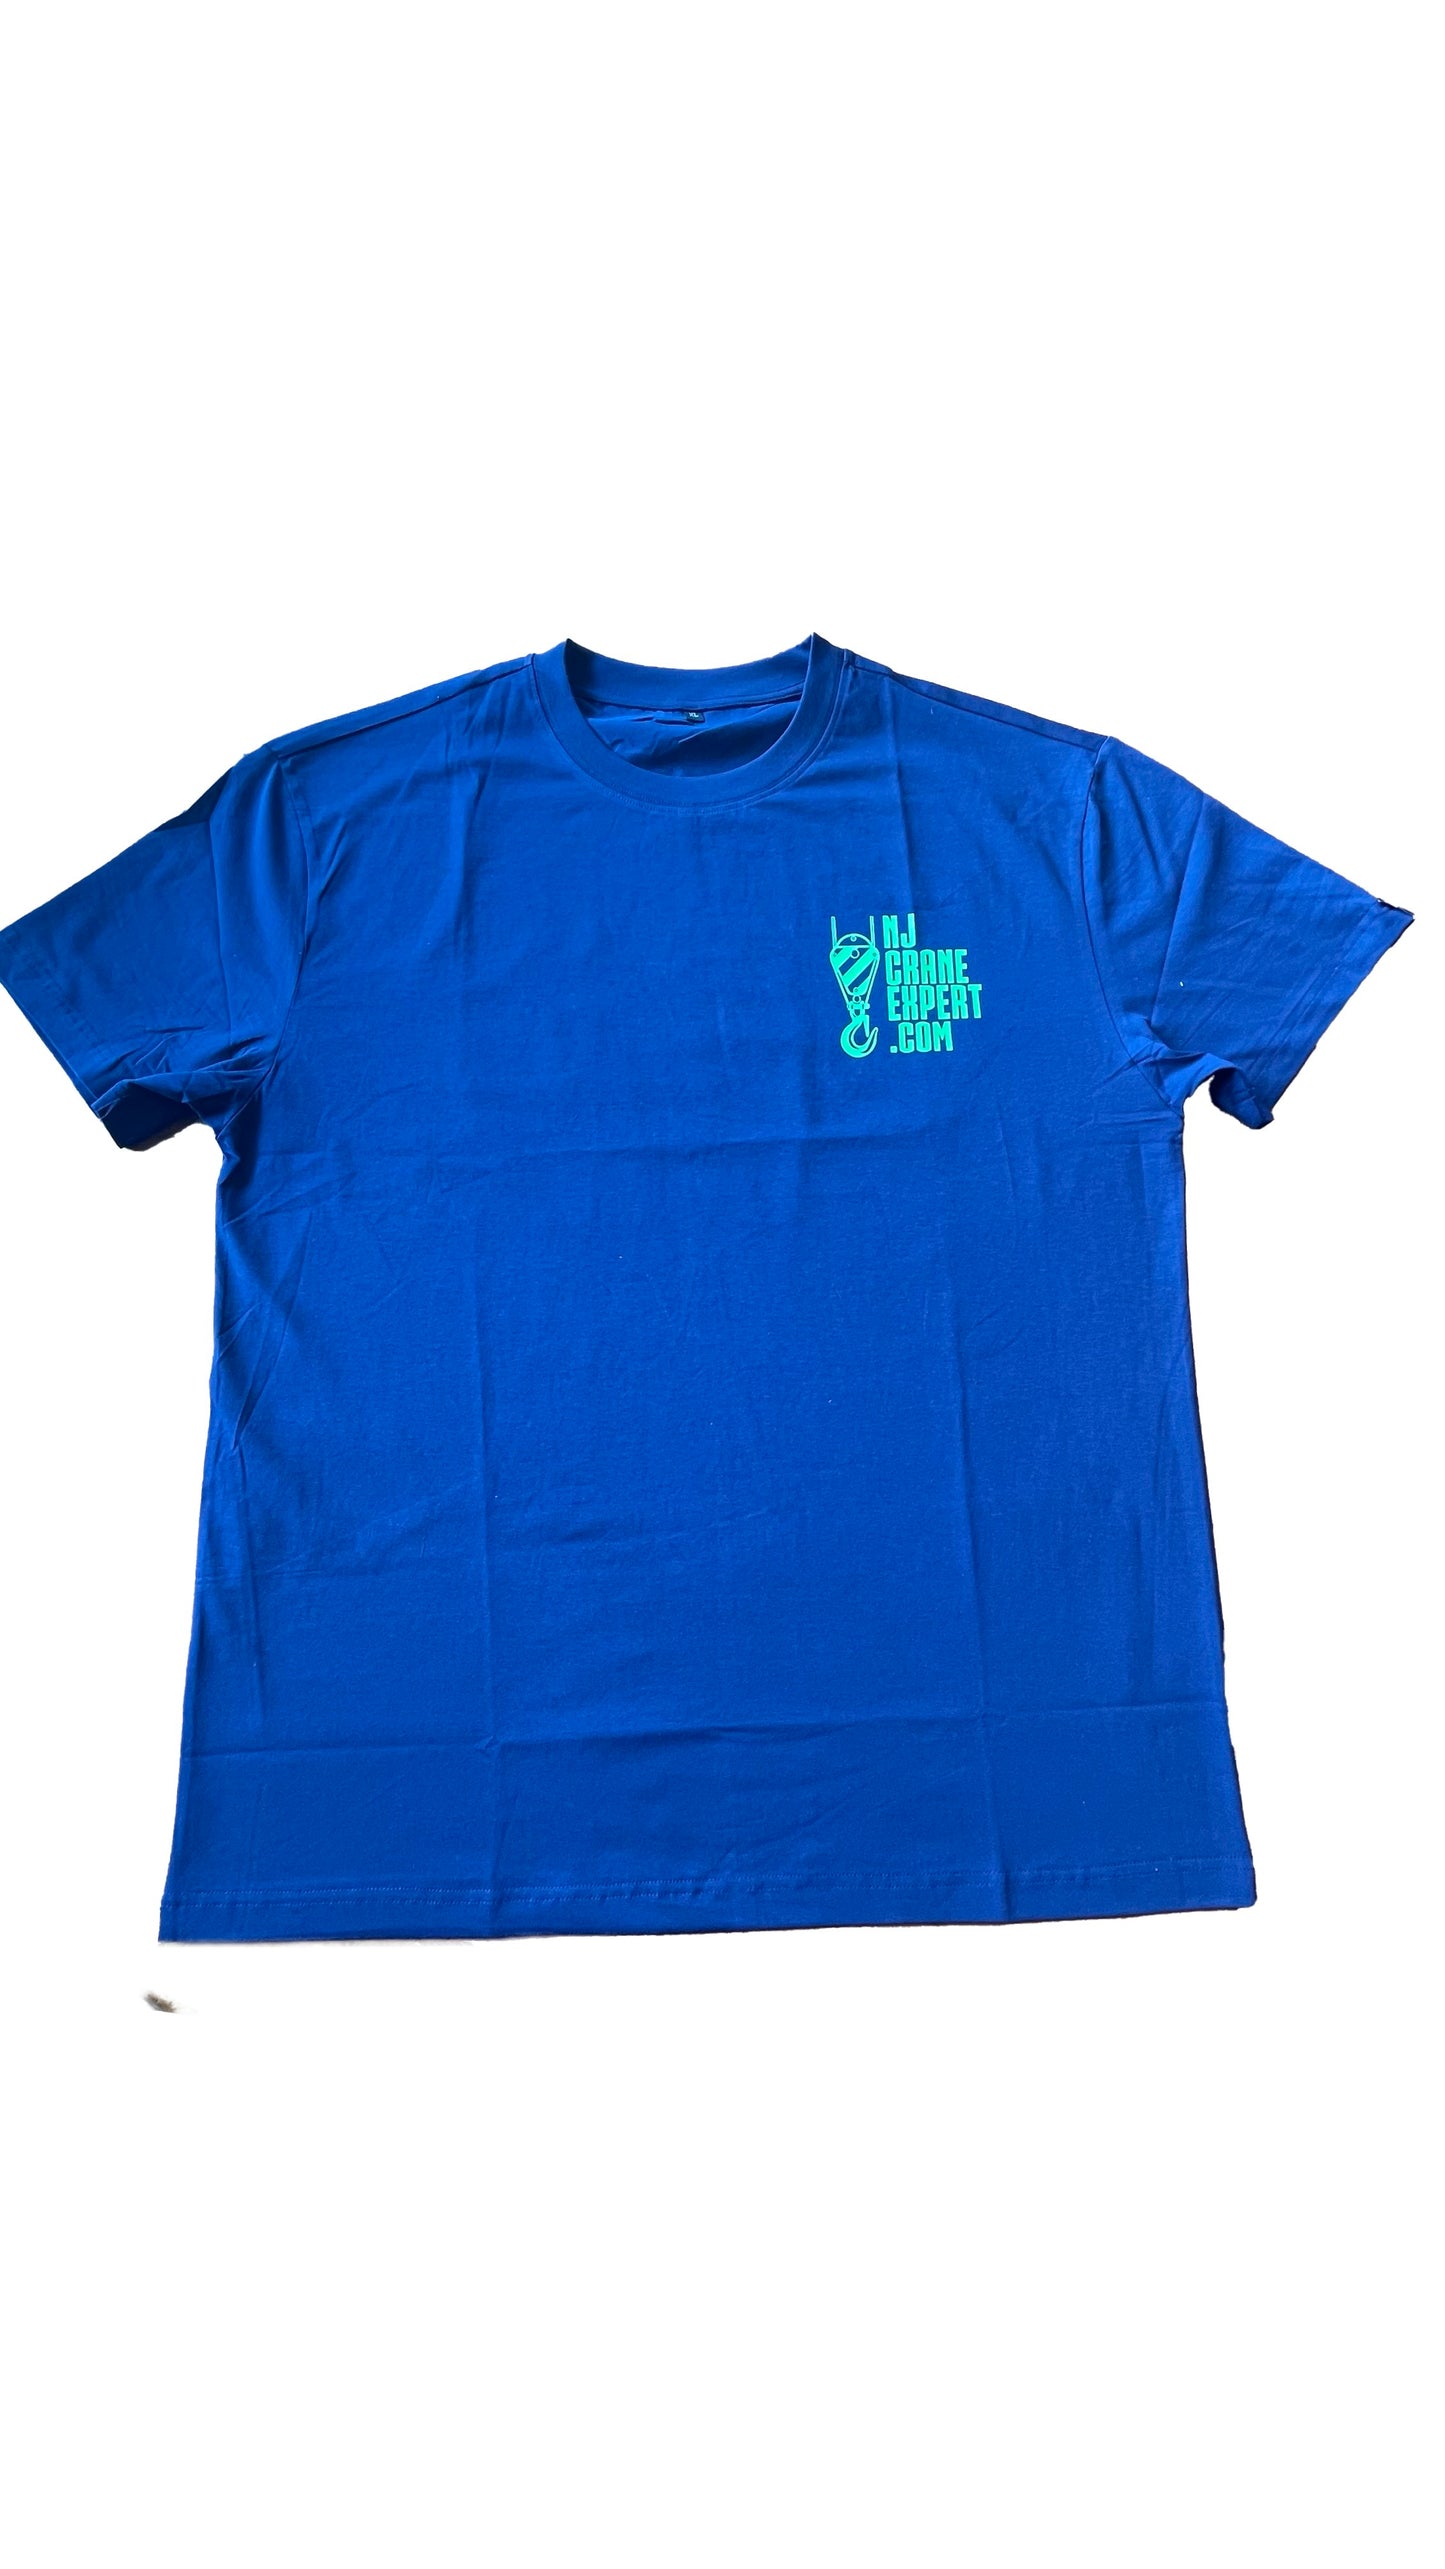 NJ Crane Expert T-Shirt Blue